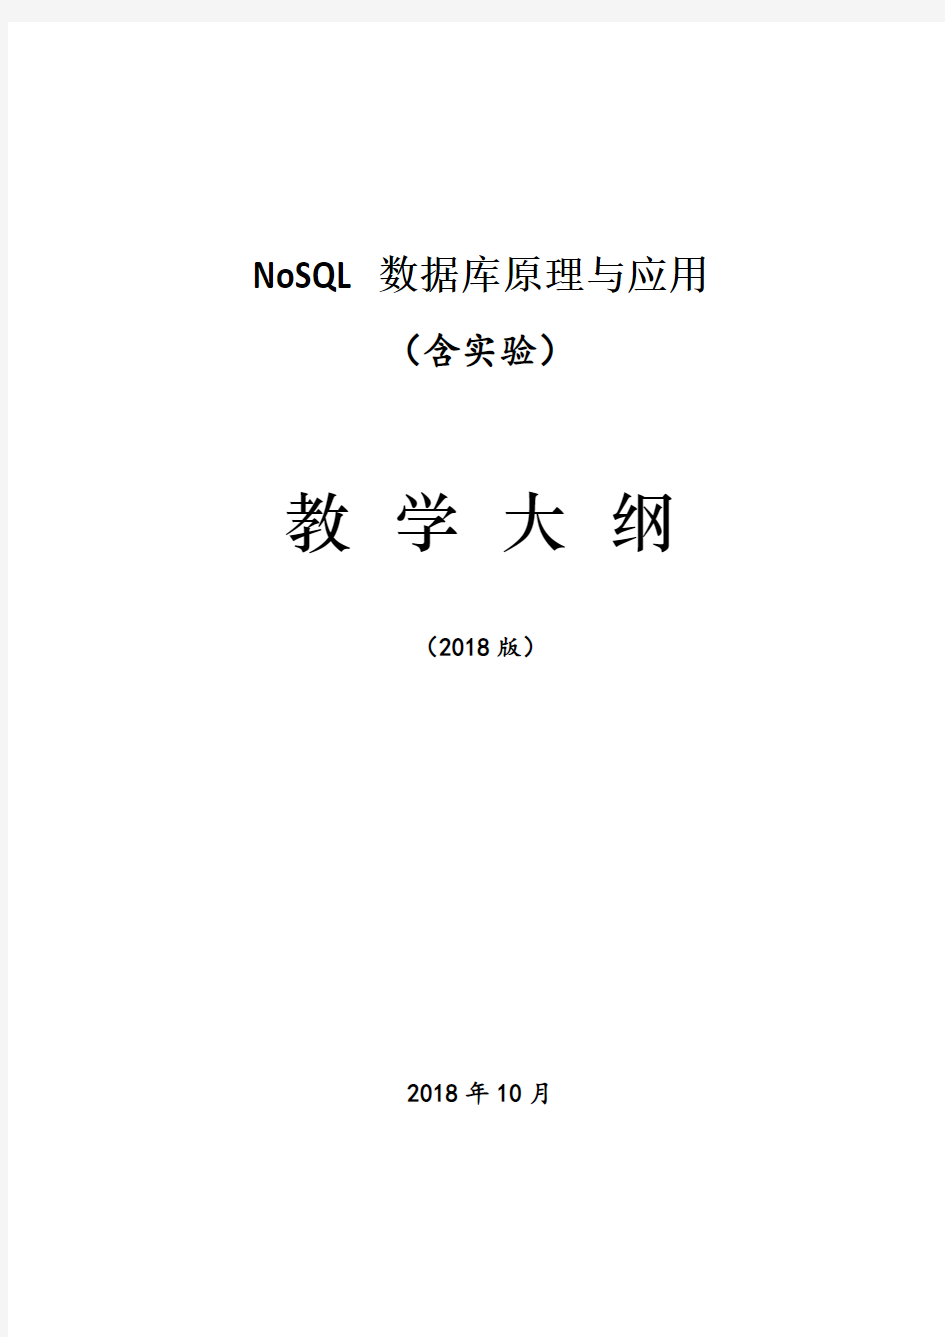 4.《NoSQL数据库原理与应用》课程教学大纲(正式版)